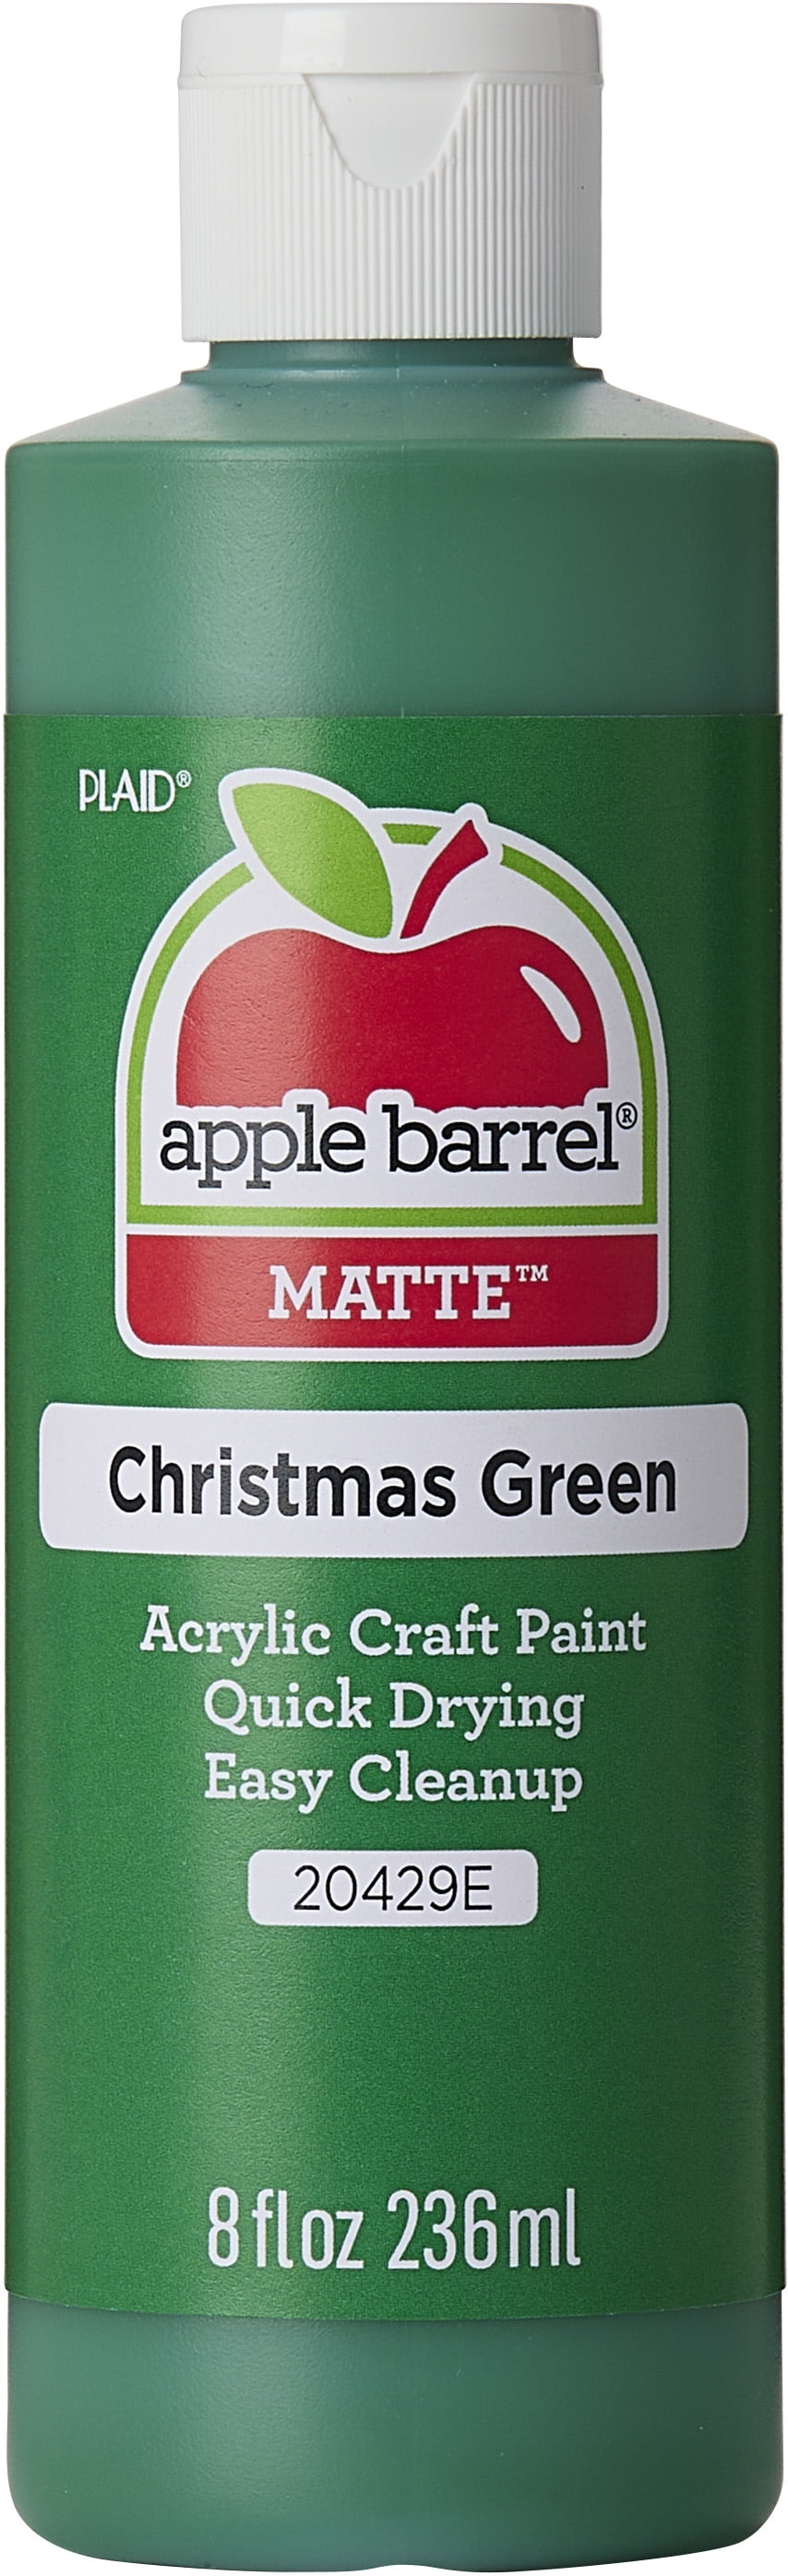 Apple Barrel Acrylic Craft Paint, Matte Finish, Christmas Green, 8 fl oz